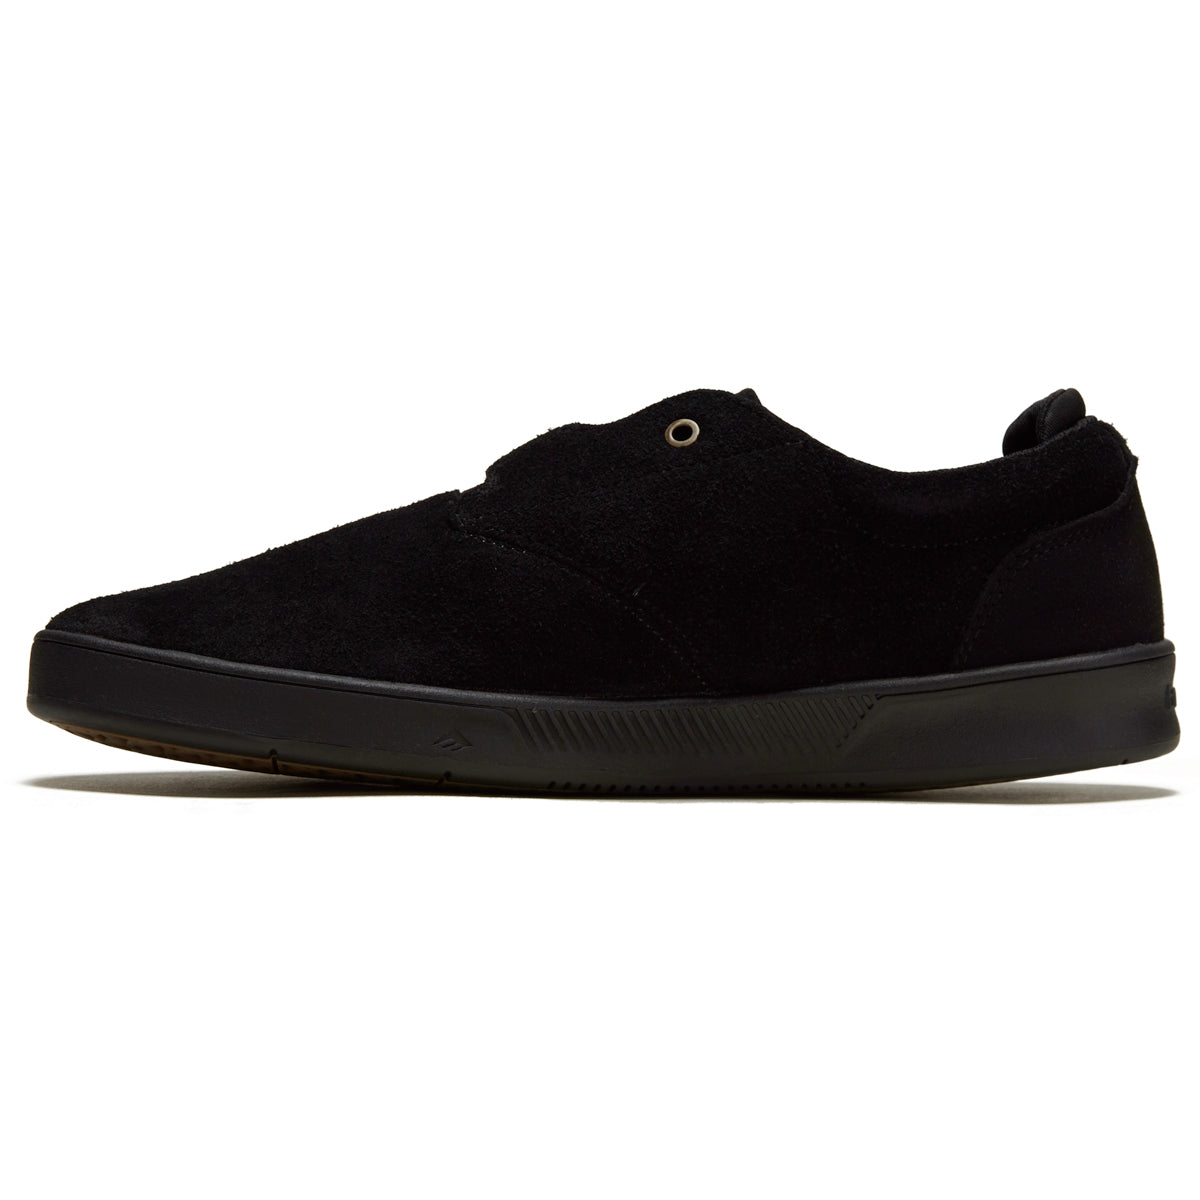 Emerica Romero Skater Shoes - Black image 2